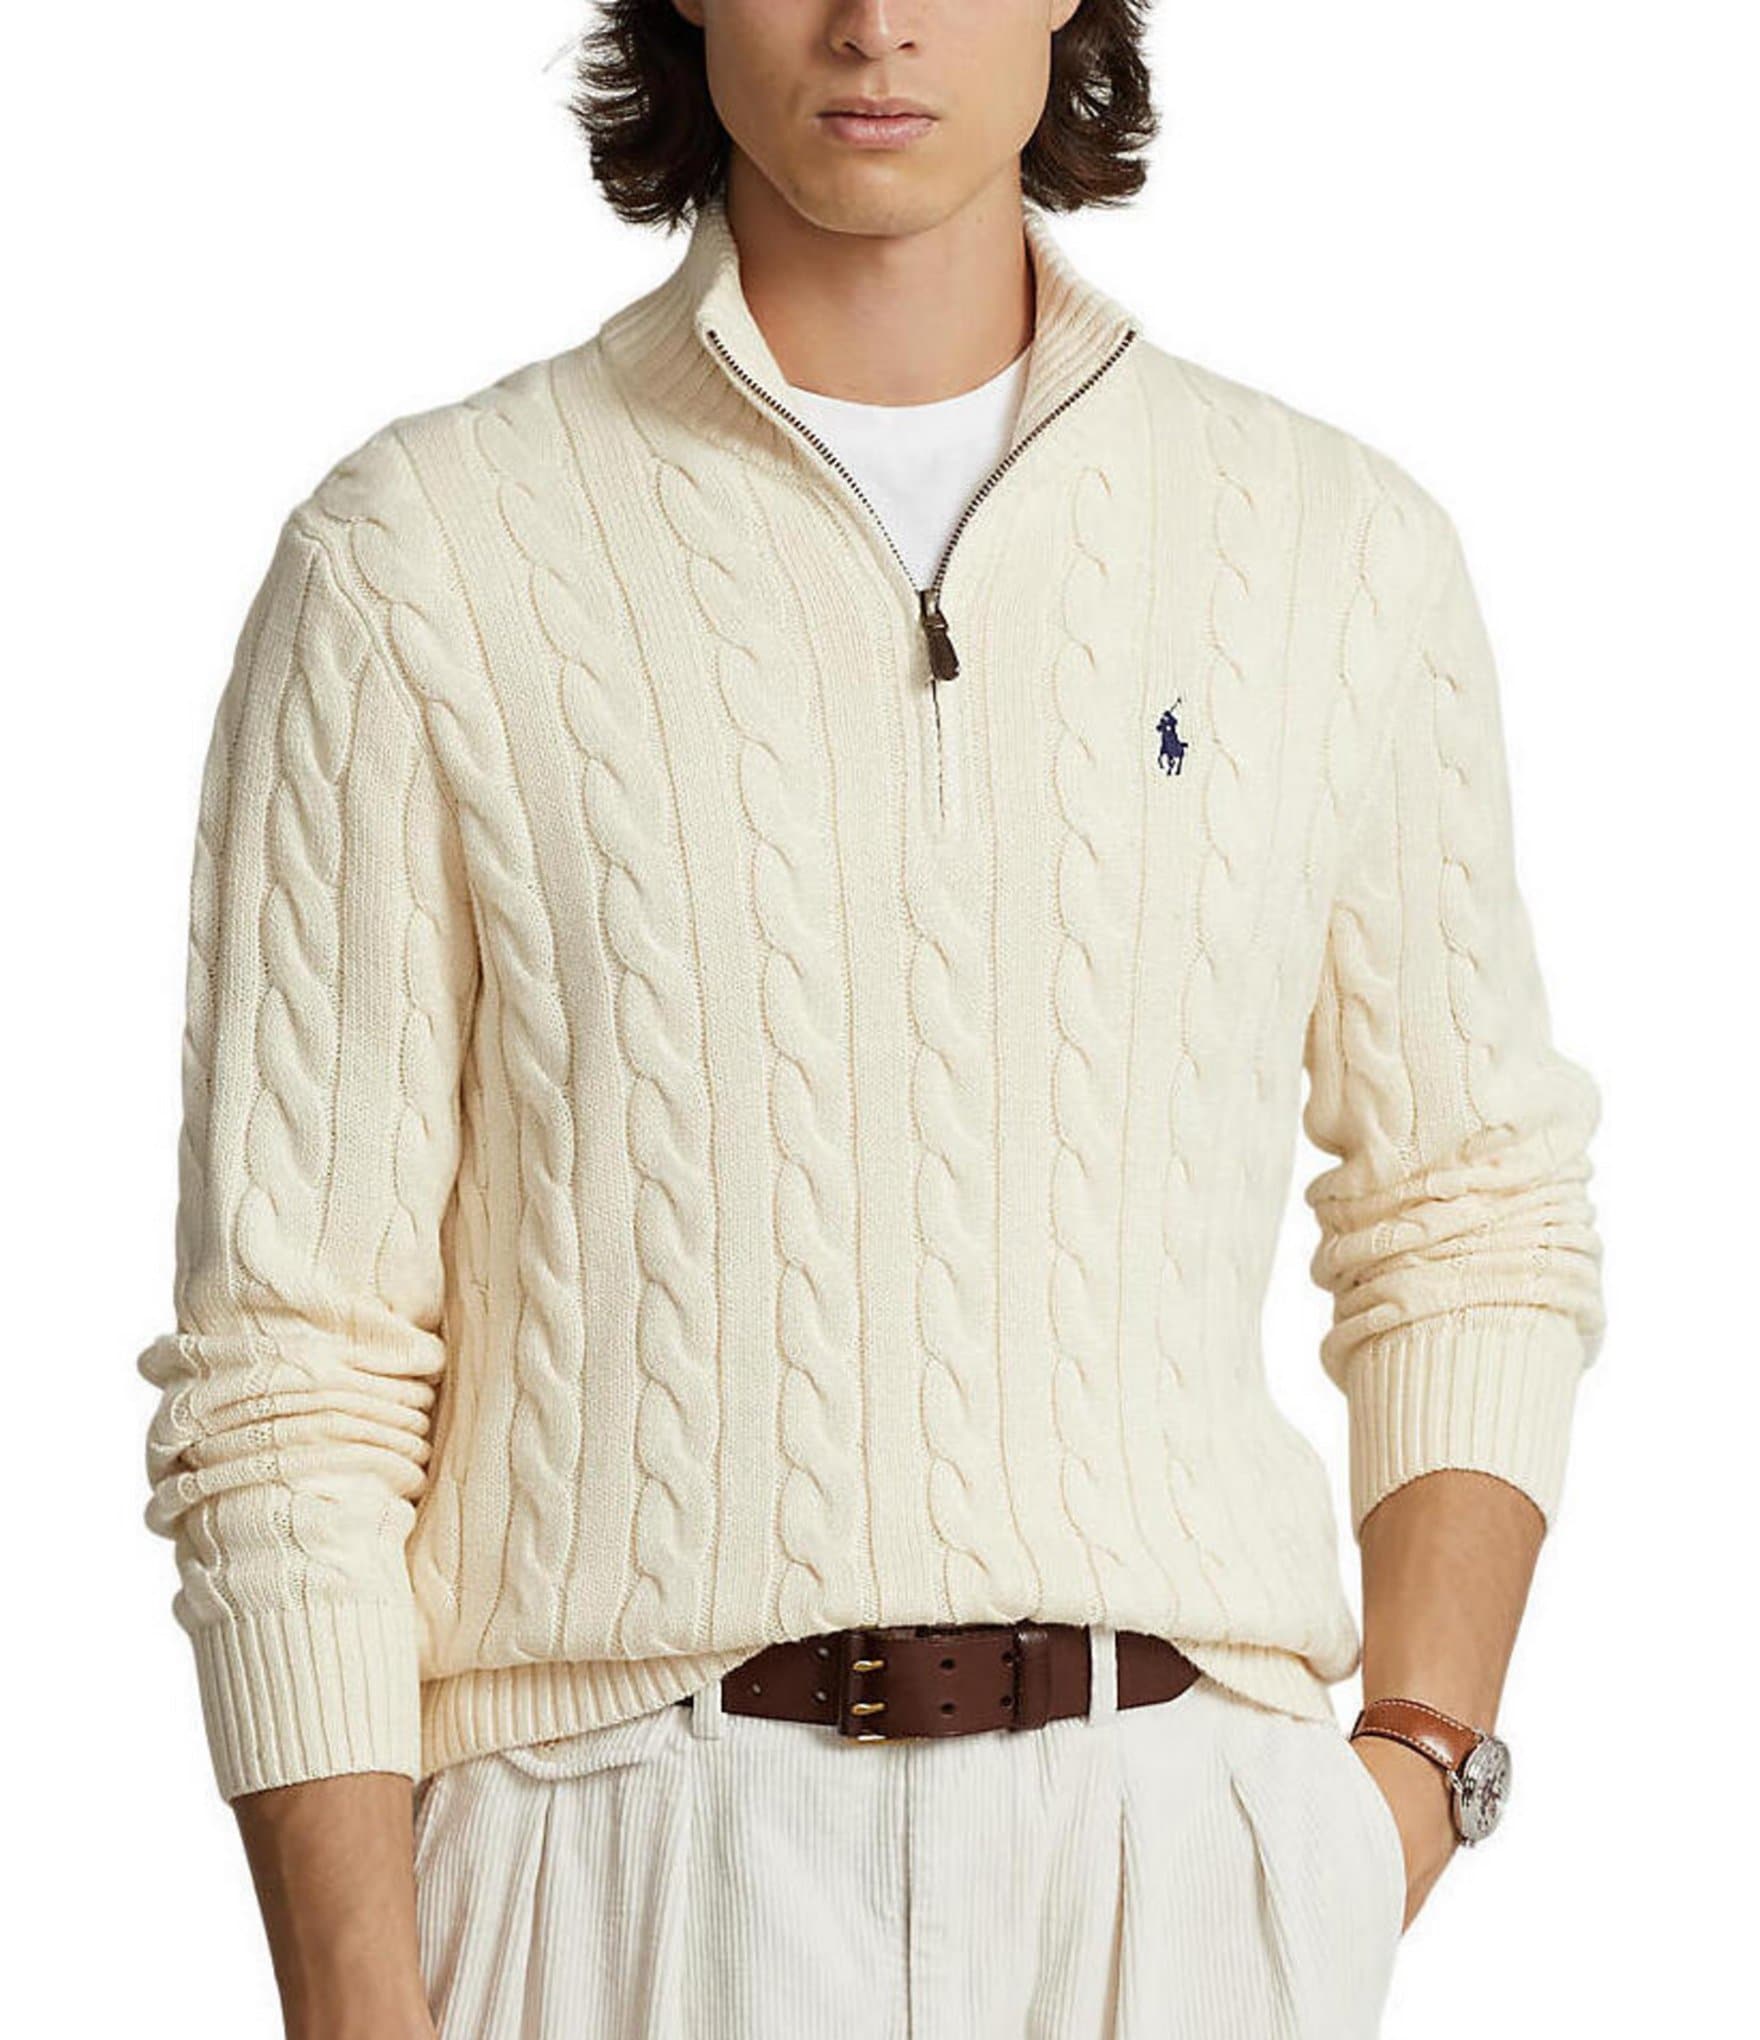 Vintage Polo Cotton V-neck Sweater (M-XL)